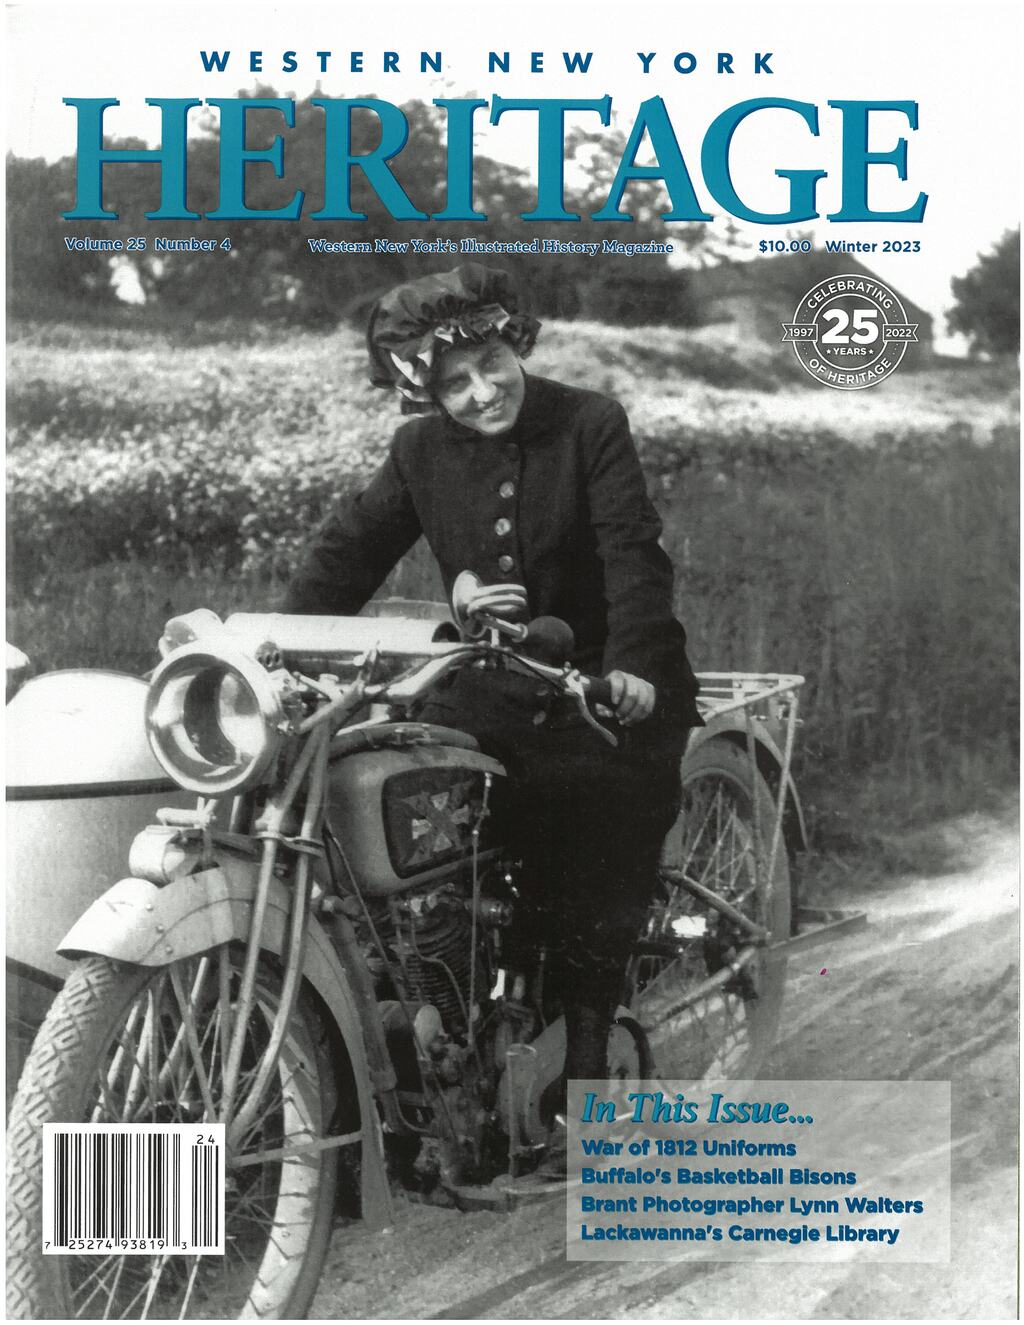 Western New York Heritage Magazine - Vol. 25, No. 4 - Winter 2023